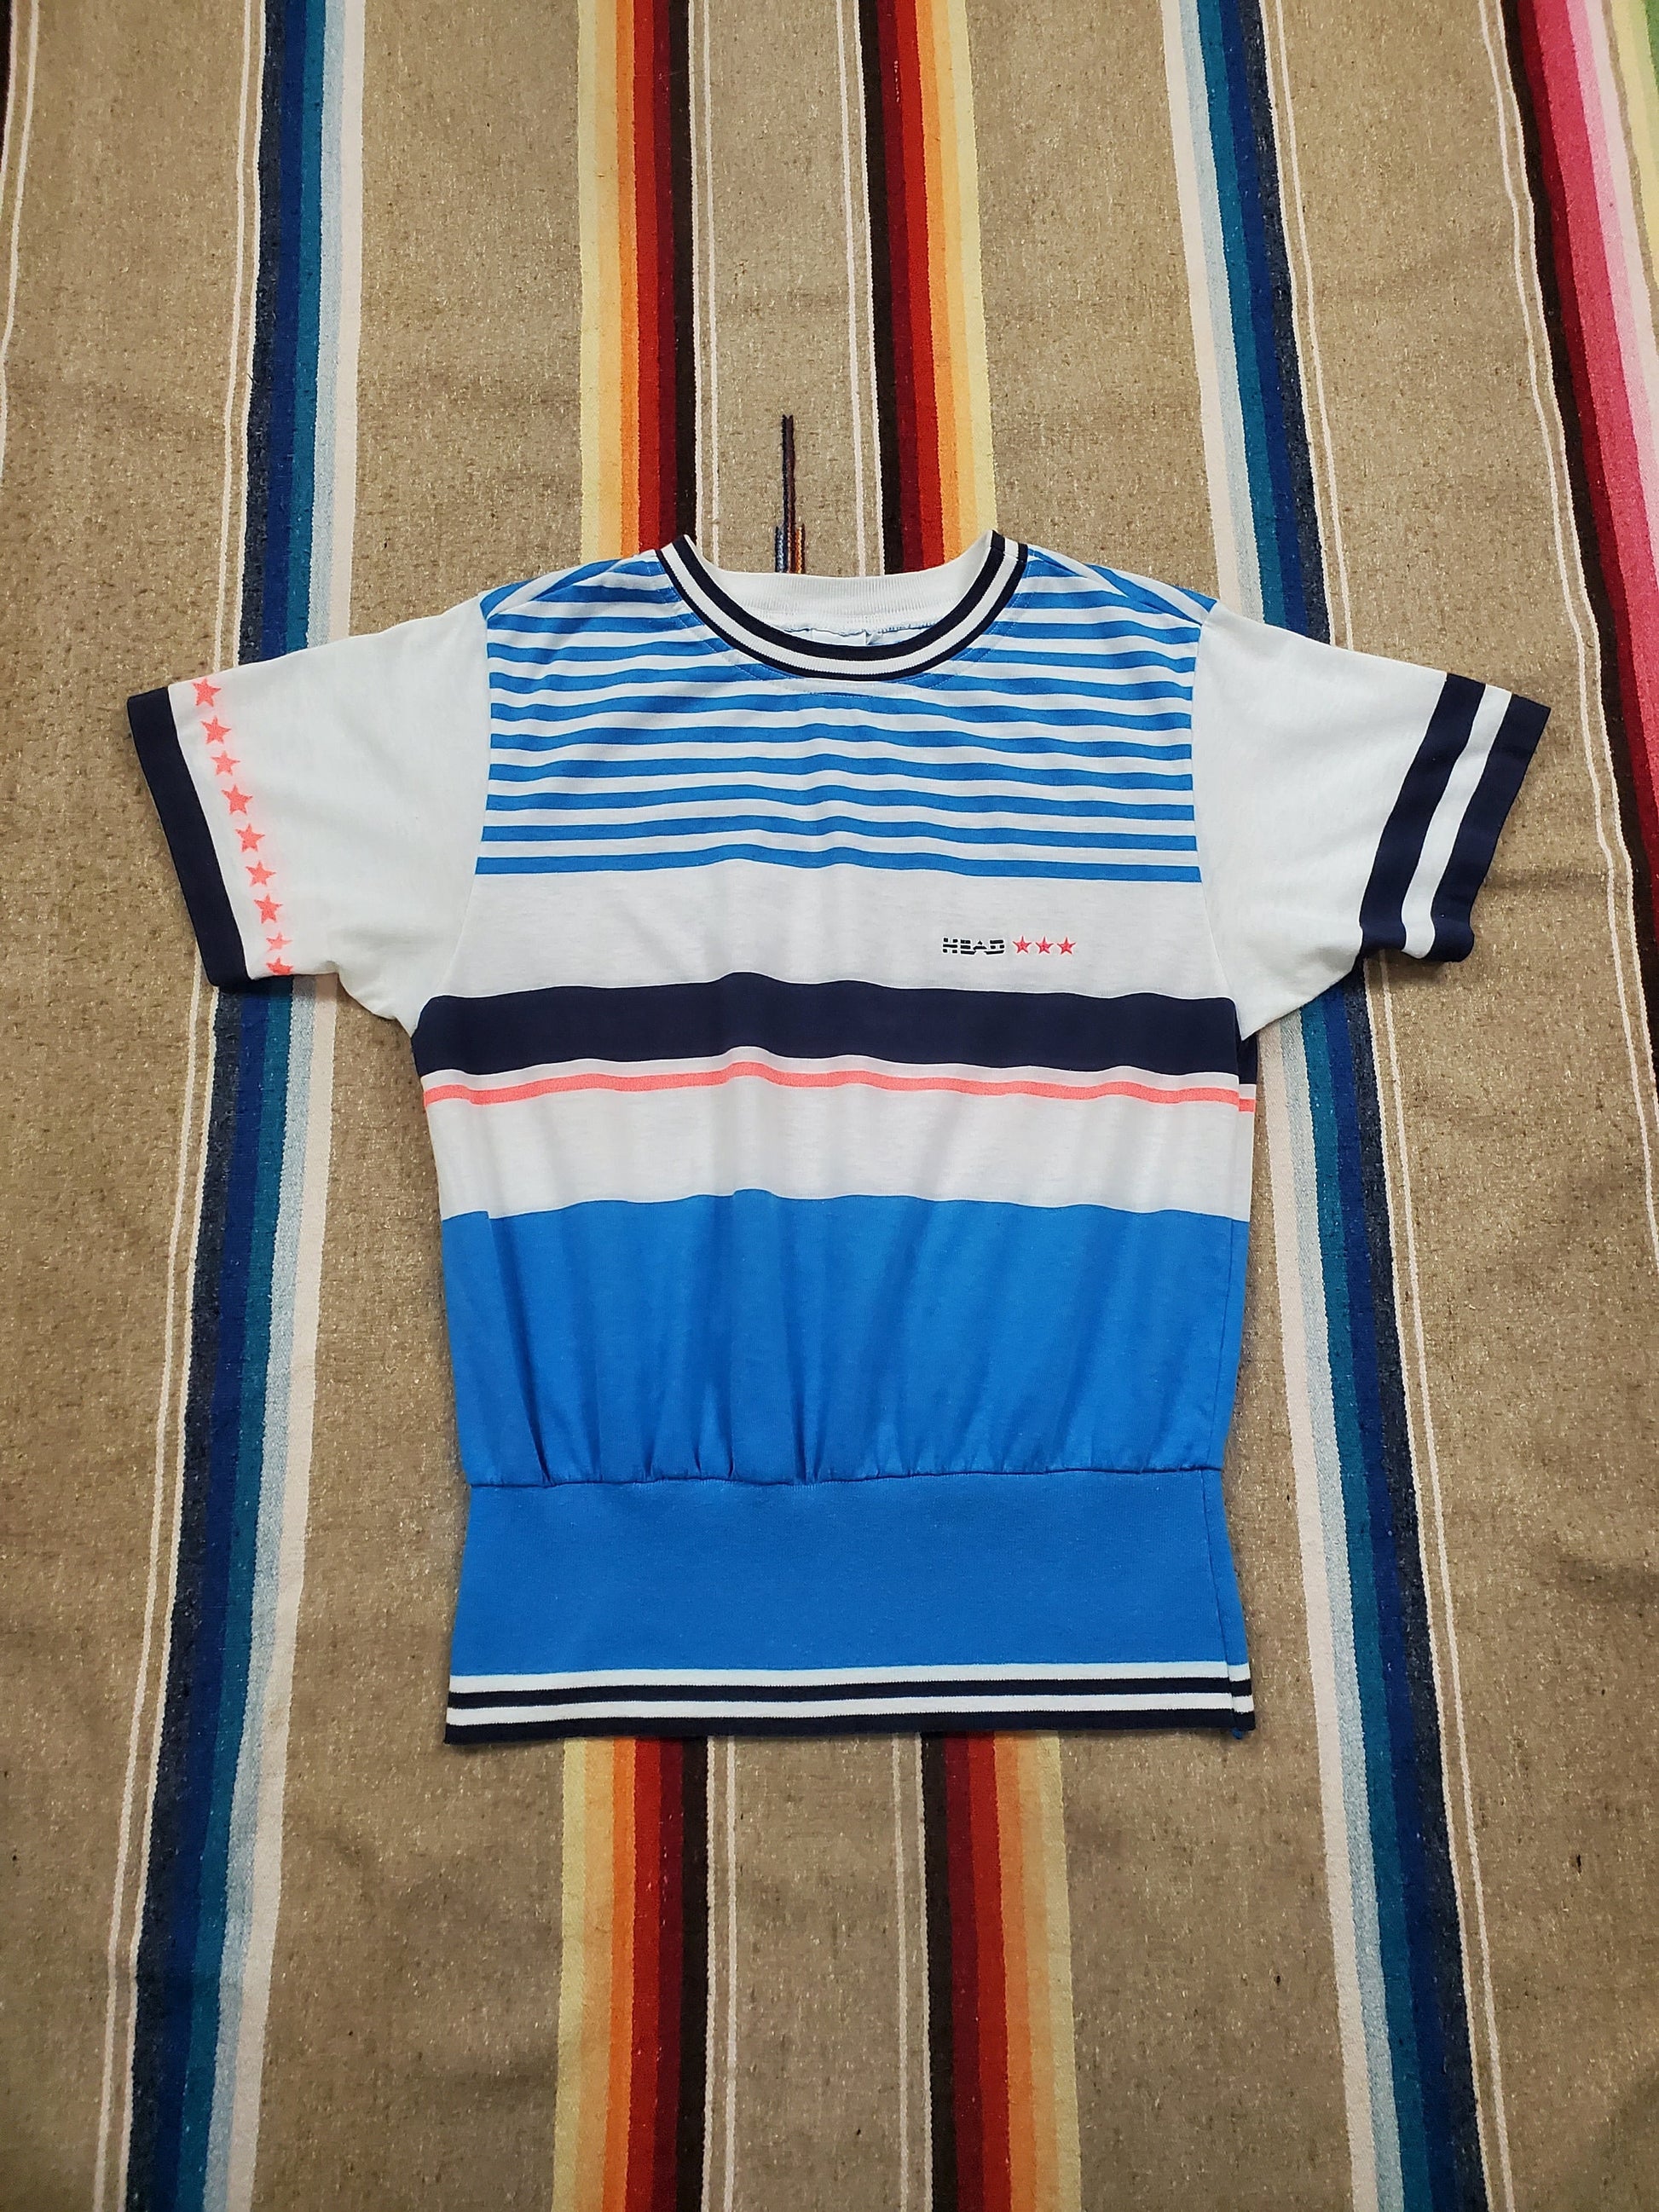 1980s/1990s Head Sportswear Tennis Very Lightweight Short Sleeve Sweatshirt Made in USA Size M